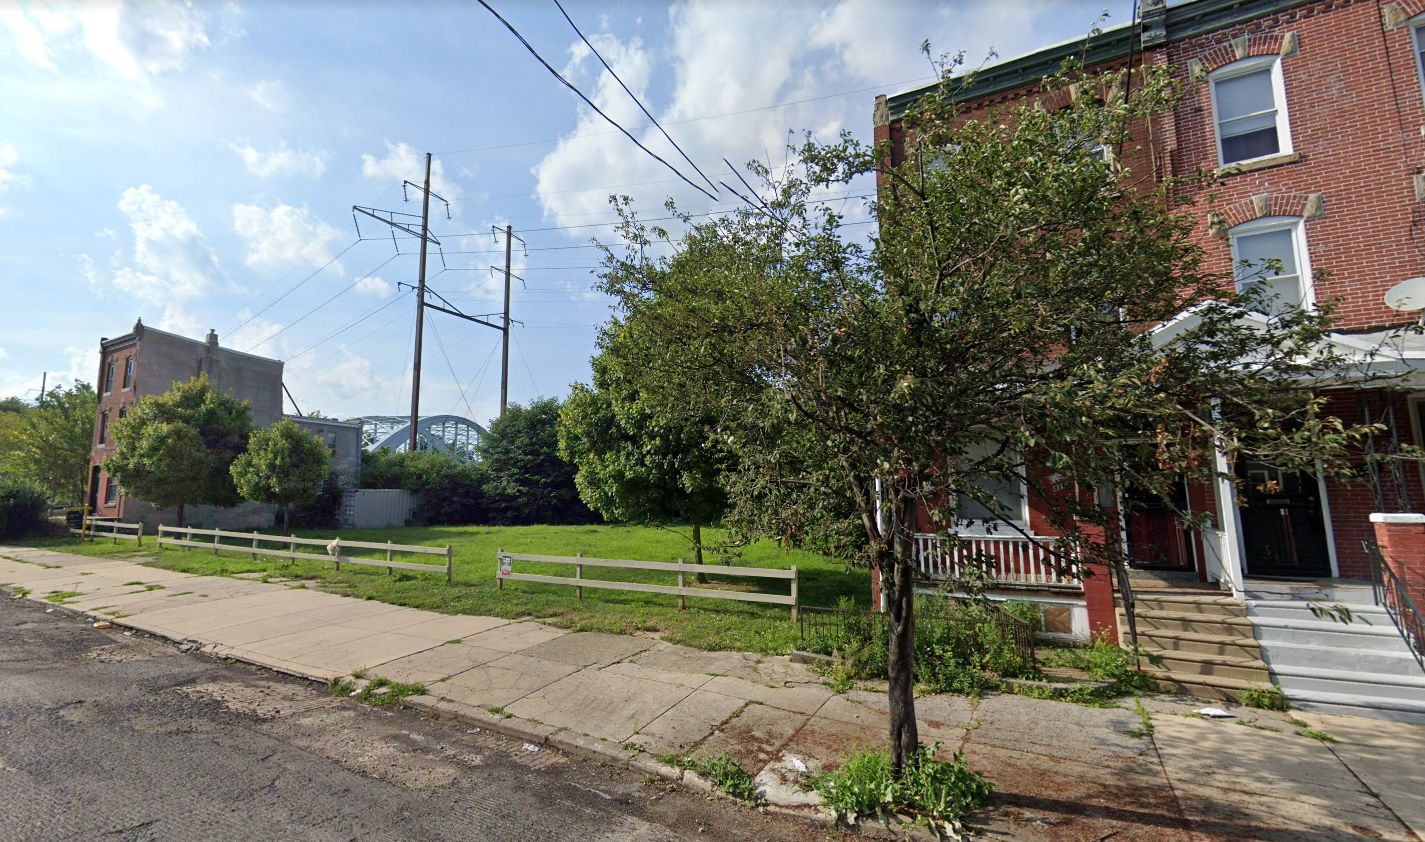 4165 Mantua Avenue. Looking northwest prior to redevelopment. July 2019. Credit: Google Street View